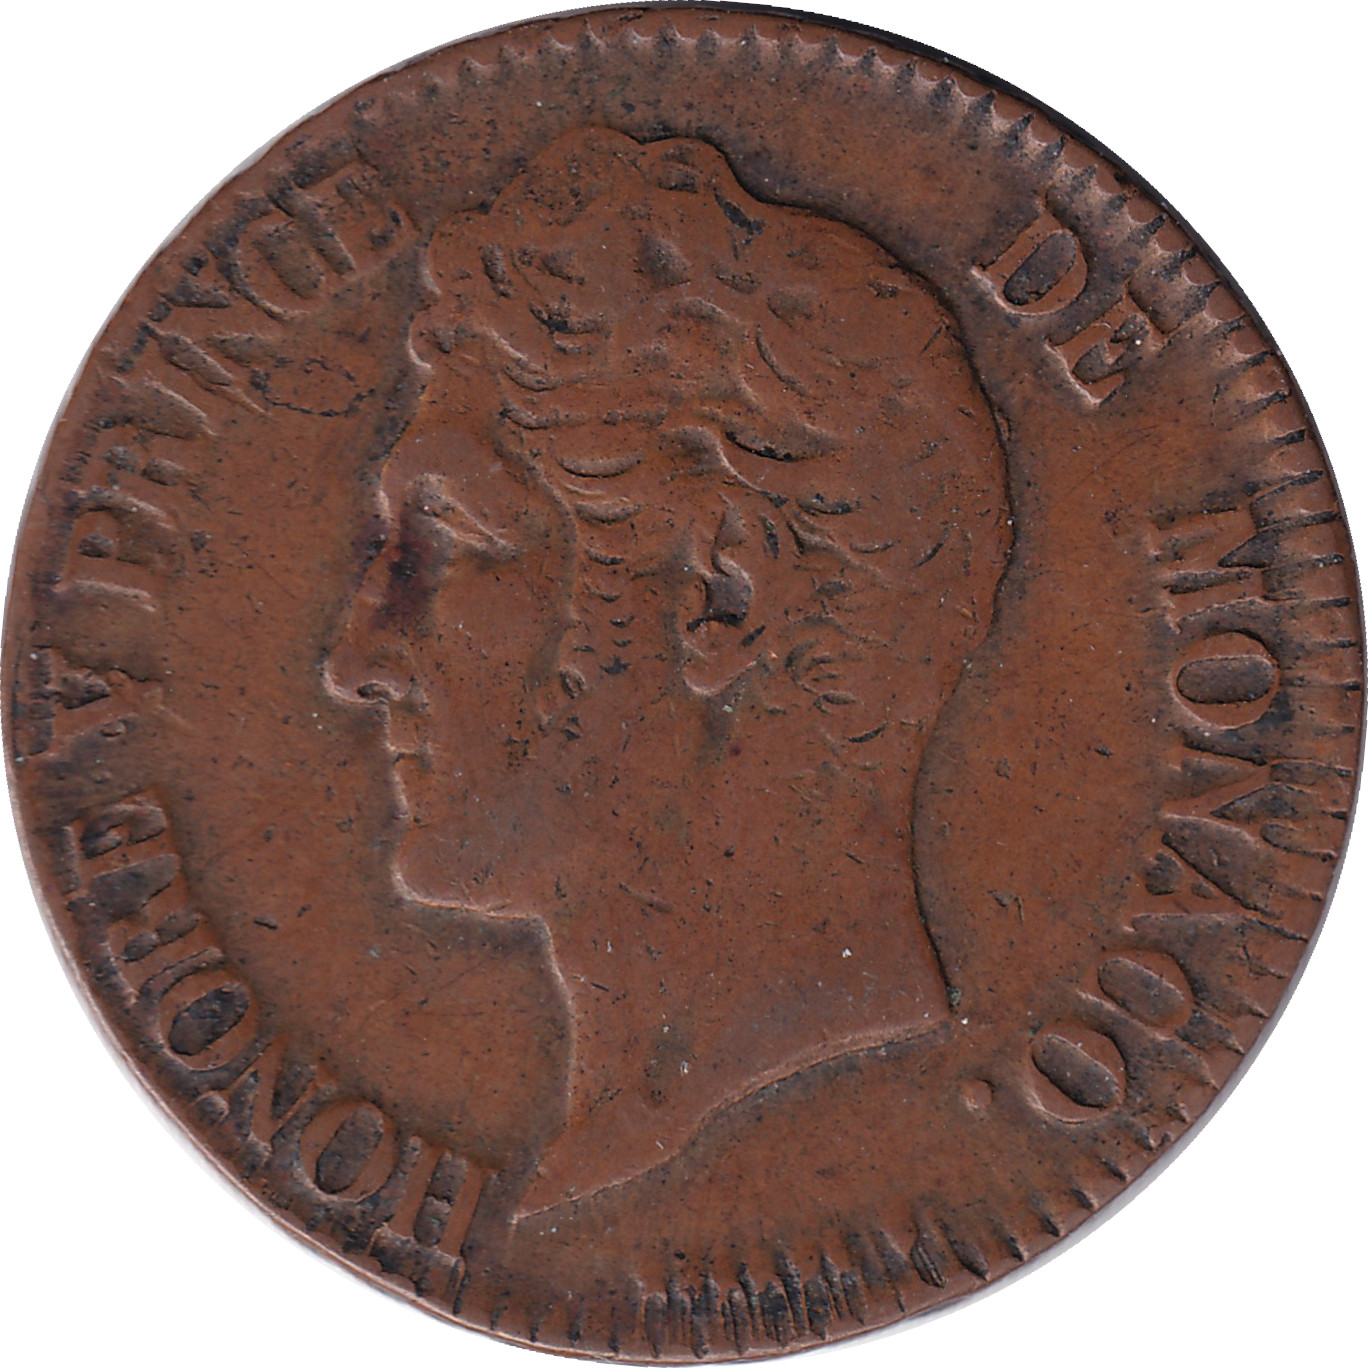 5 centimes - Honoré V - BORREL F. - Large head